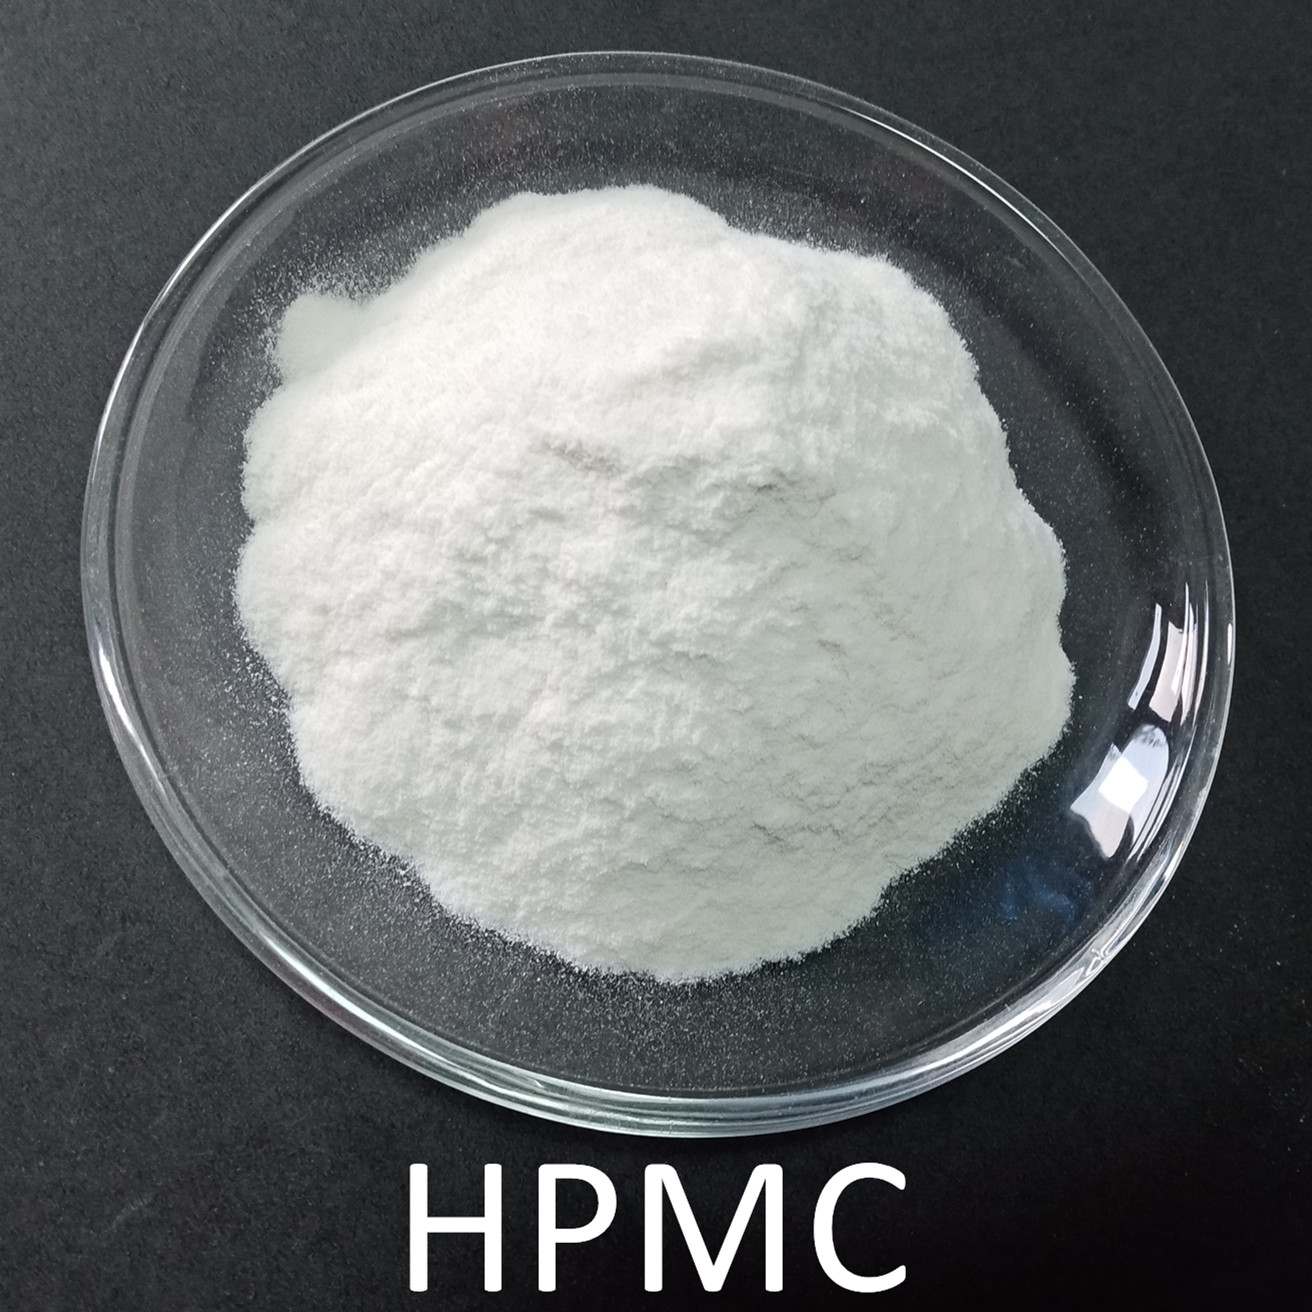 HPMC ಹೈಡ್ರಾಕ್ಸಿಪ್ರೊಪಿಲ್ ಮೀಥೈಲ್ ಸೆಲ್ಯುಲೋಸ್